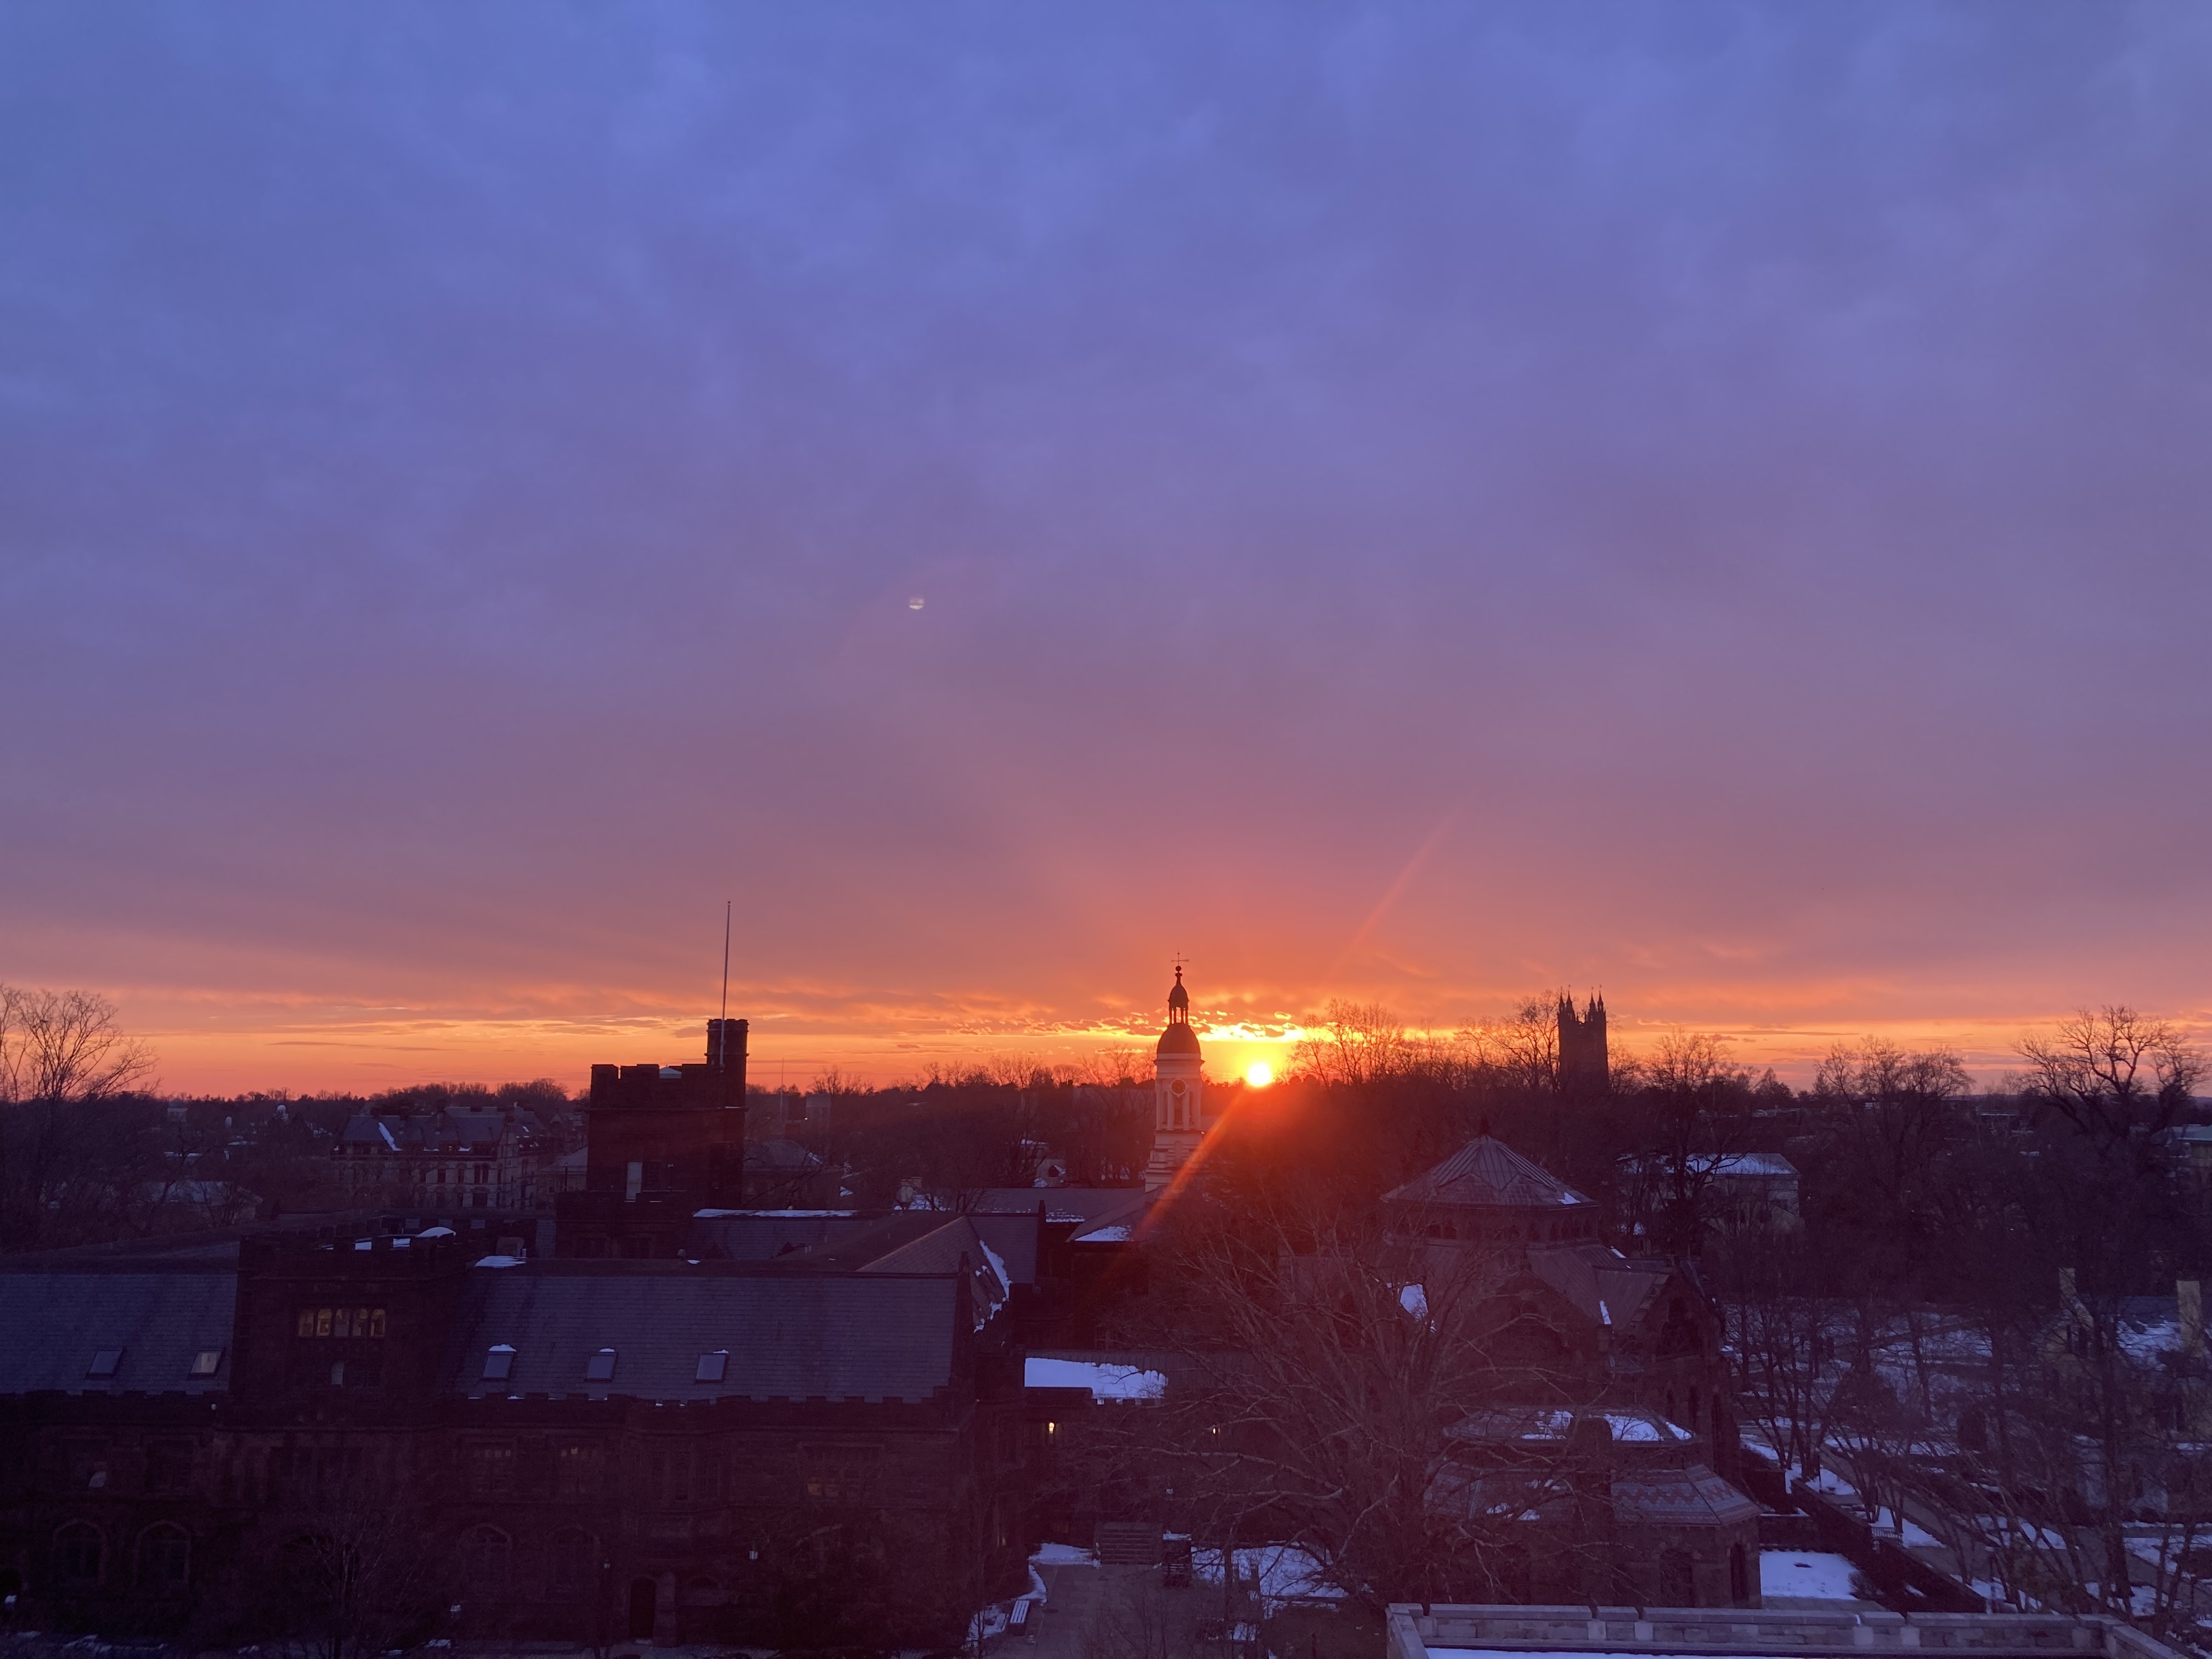 Sunset overlooking older part of Princeton University campus